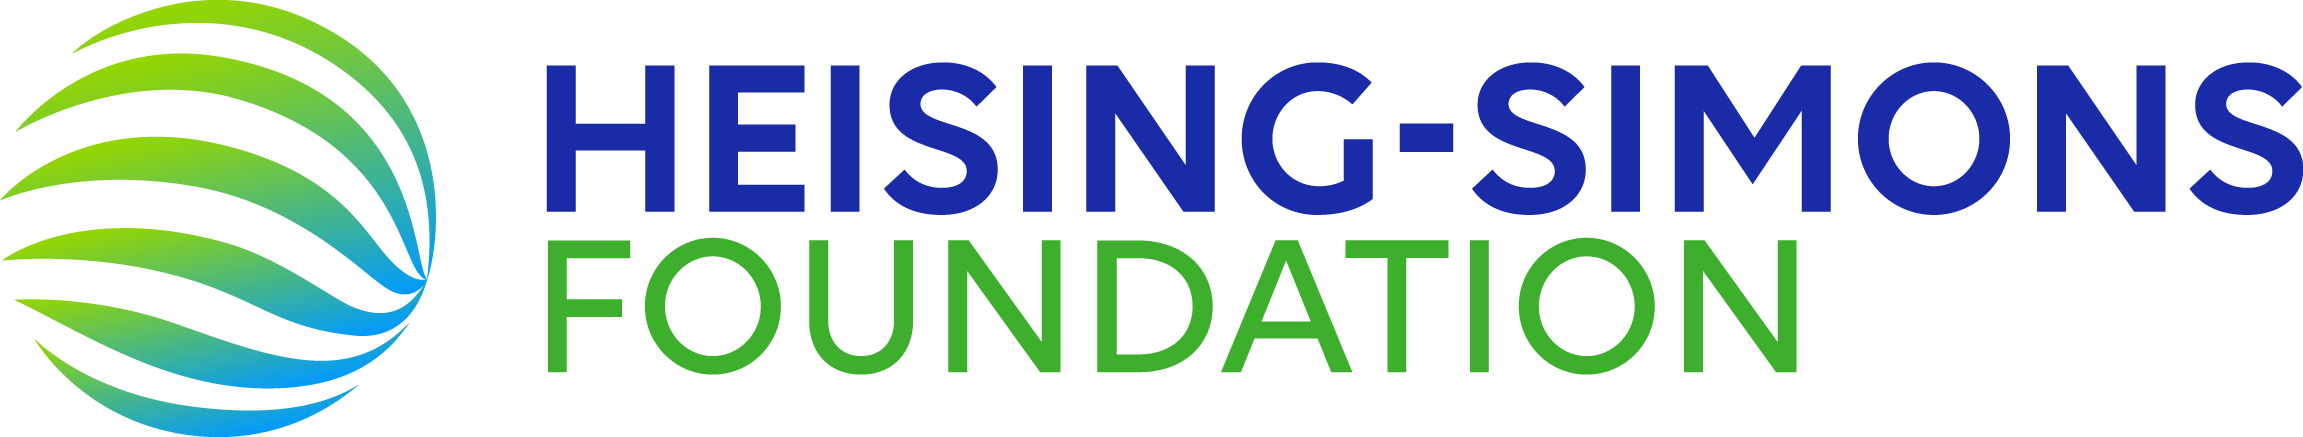 The Heising-Simons Foundation logo